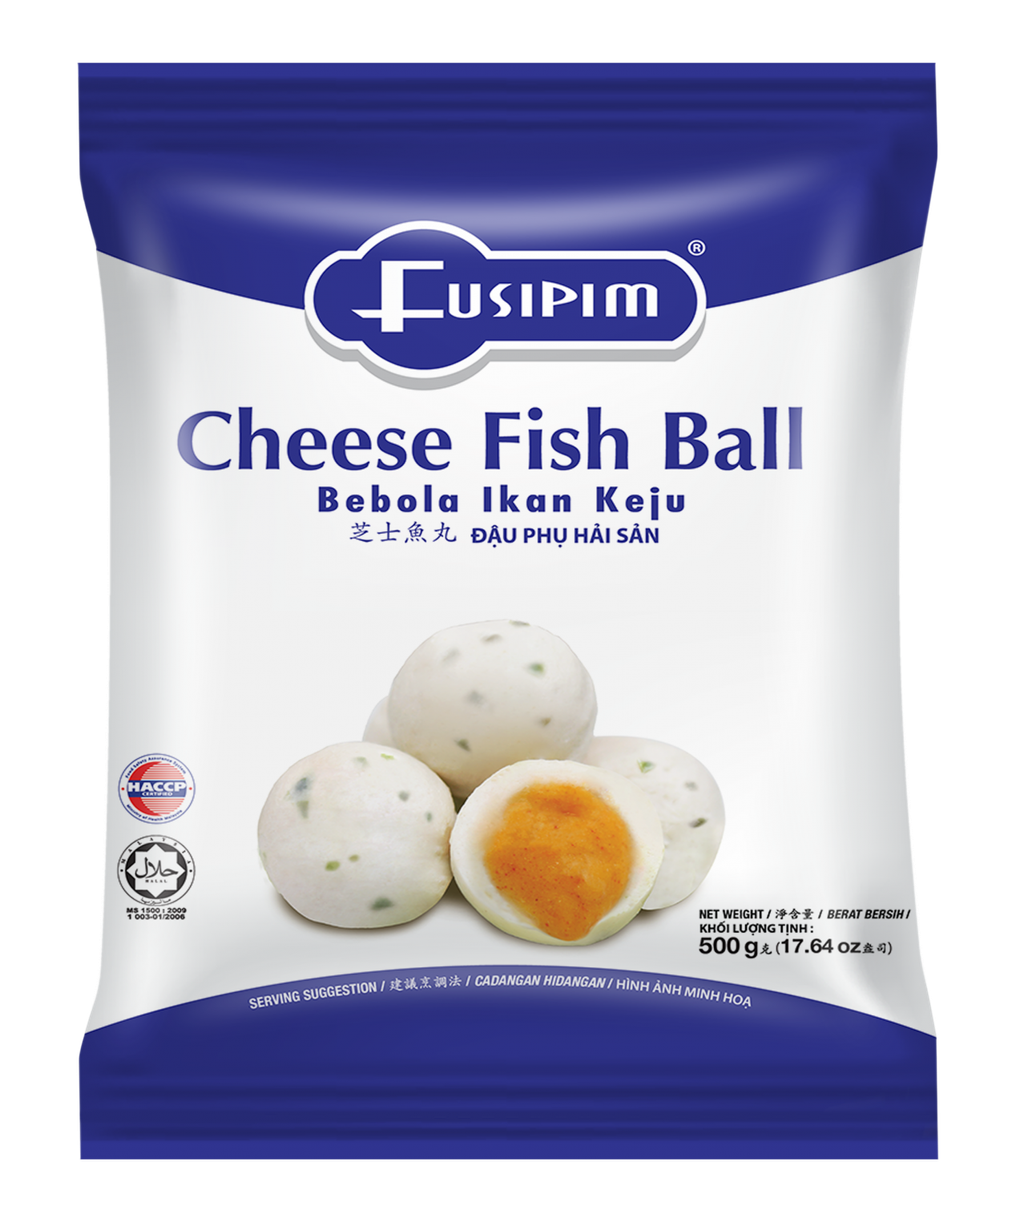 Cheese-Fish-Ball-1278x1536.png